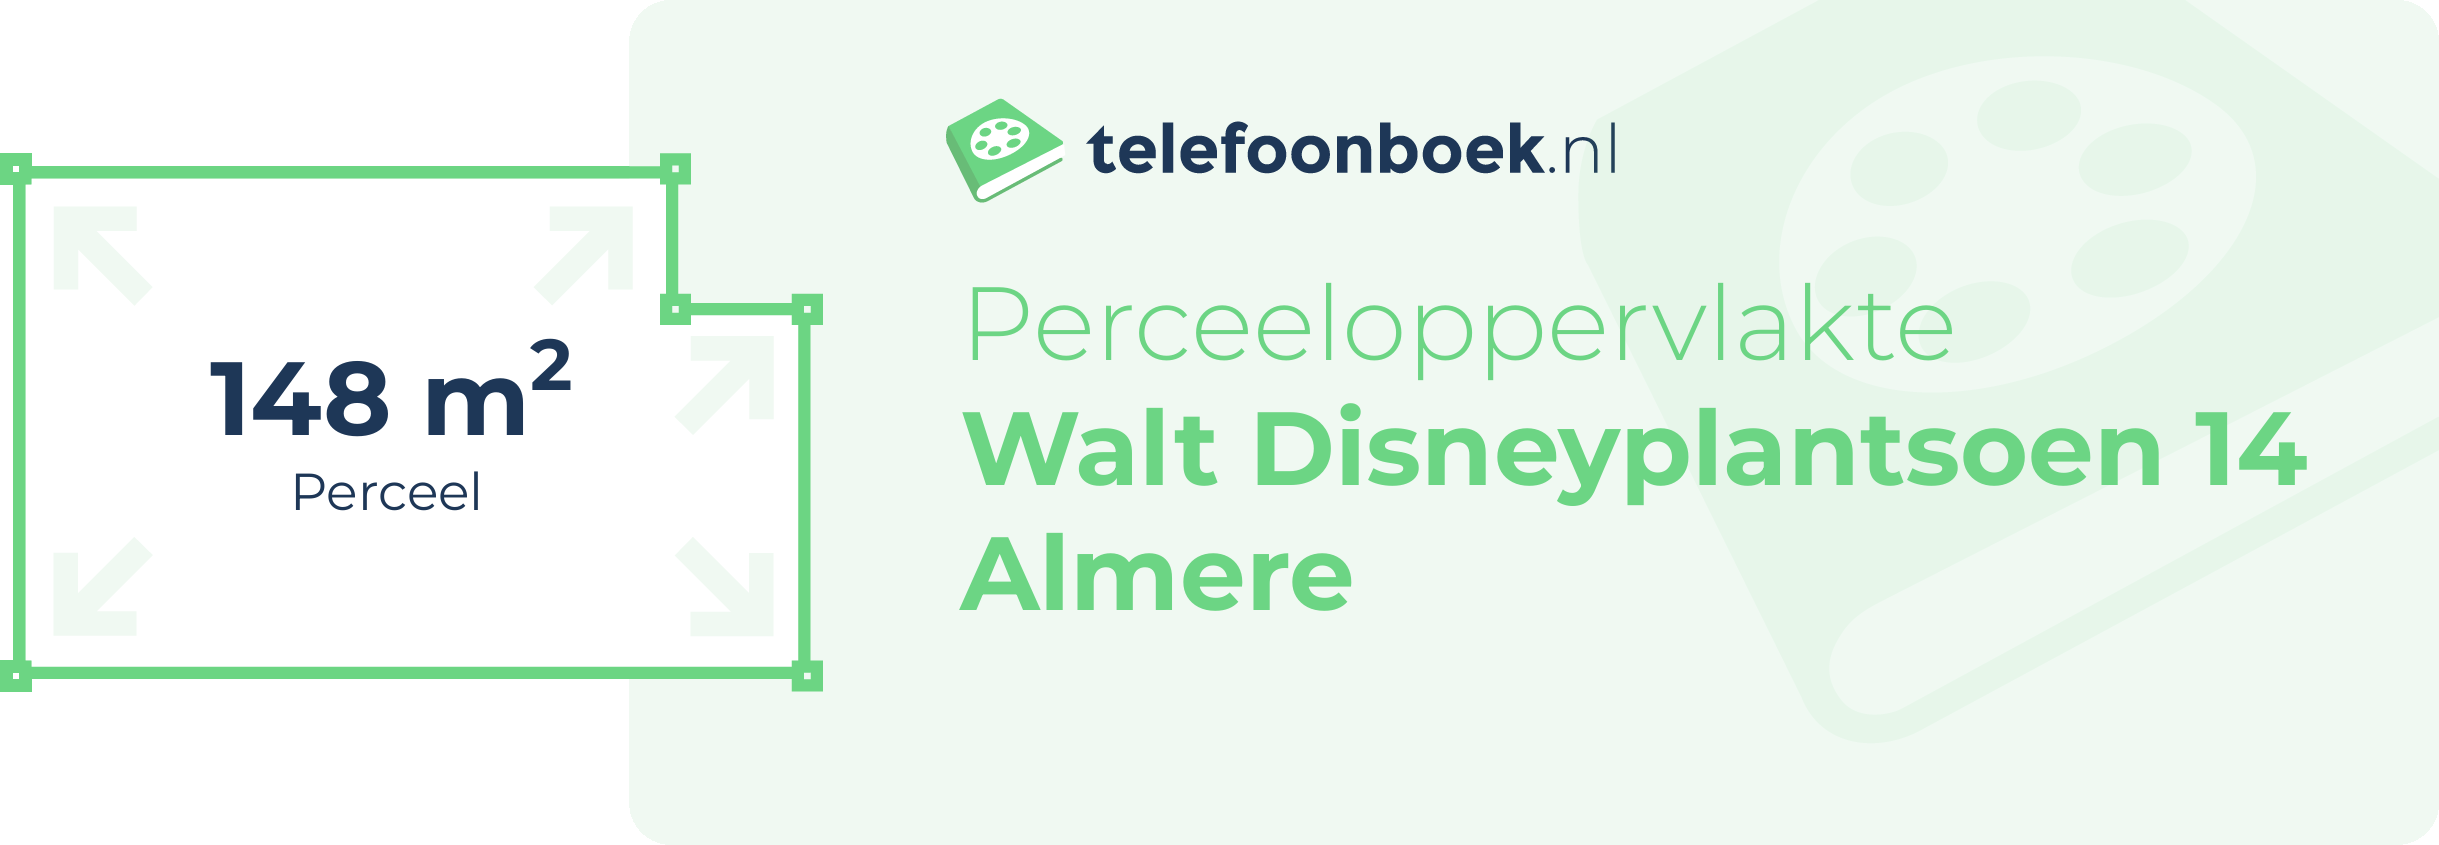 Perceeloppervlakte Walt Disneyplantsoen 14 Almere